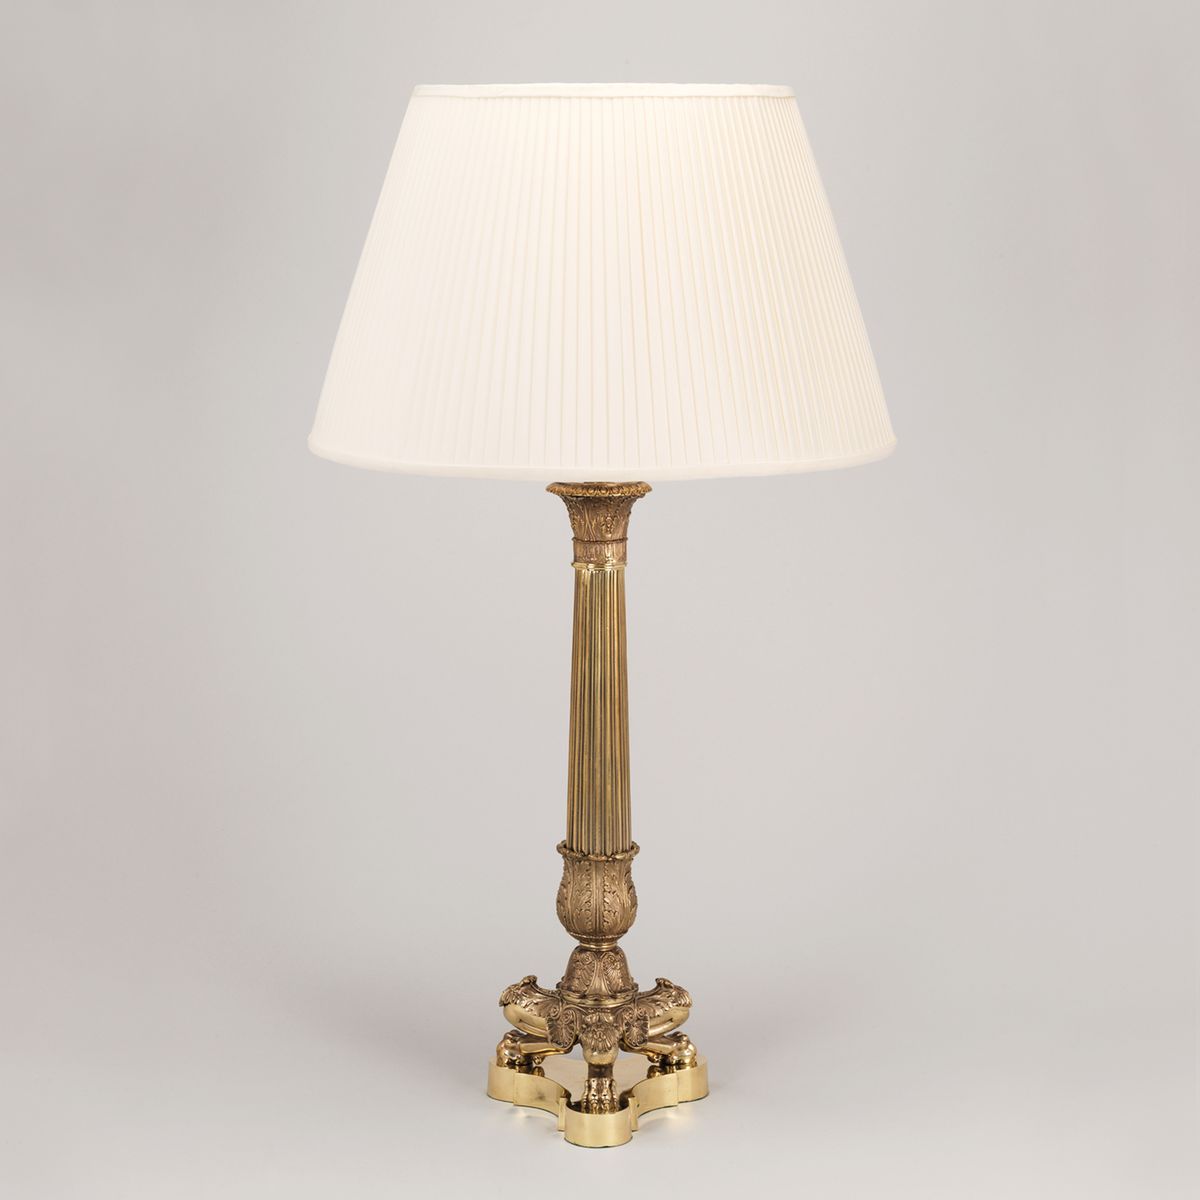 Brass column table lamp with silk pleated cream shade